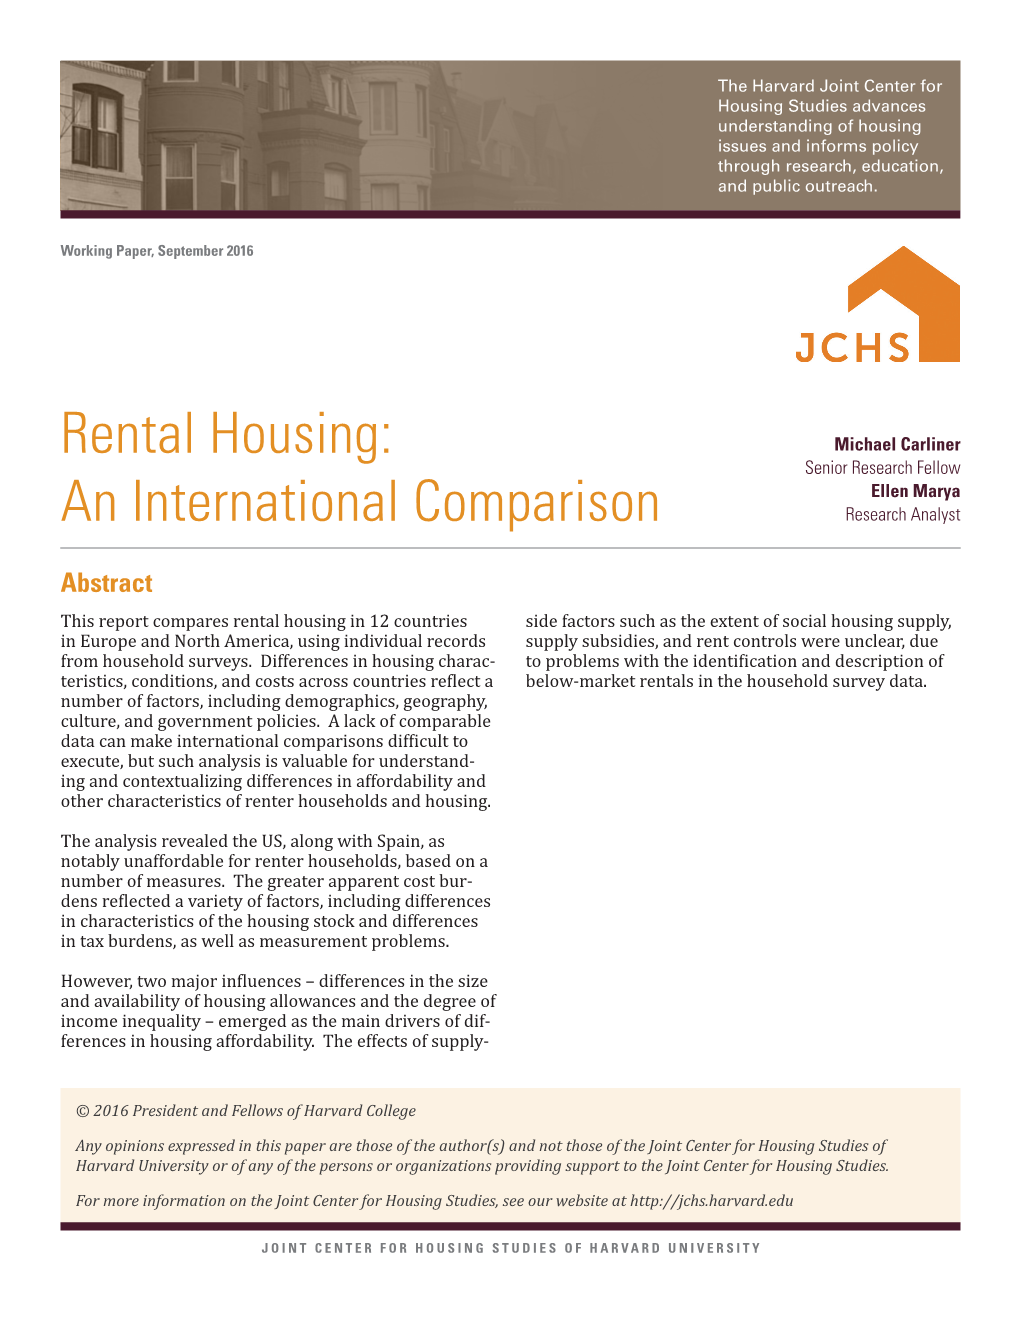 Rental Housing: an International Comparison